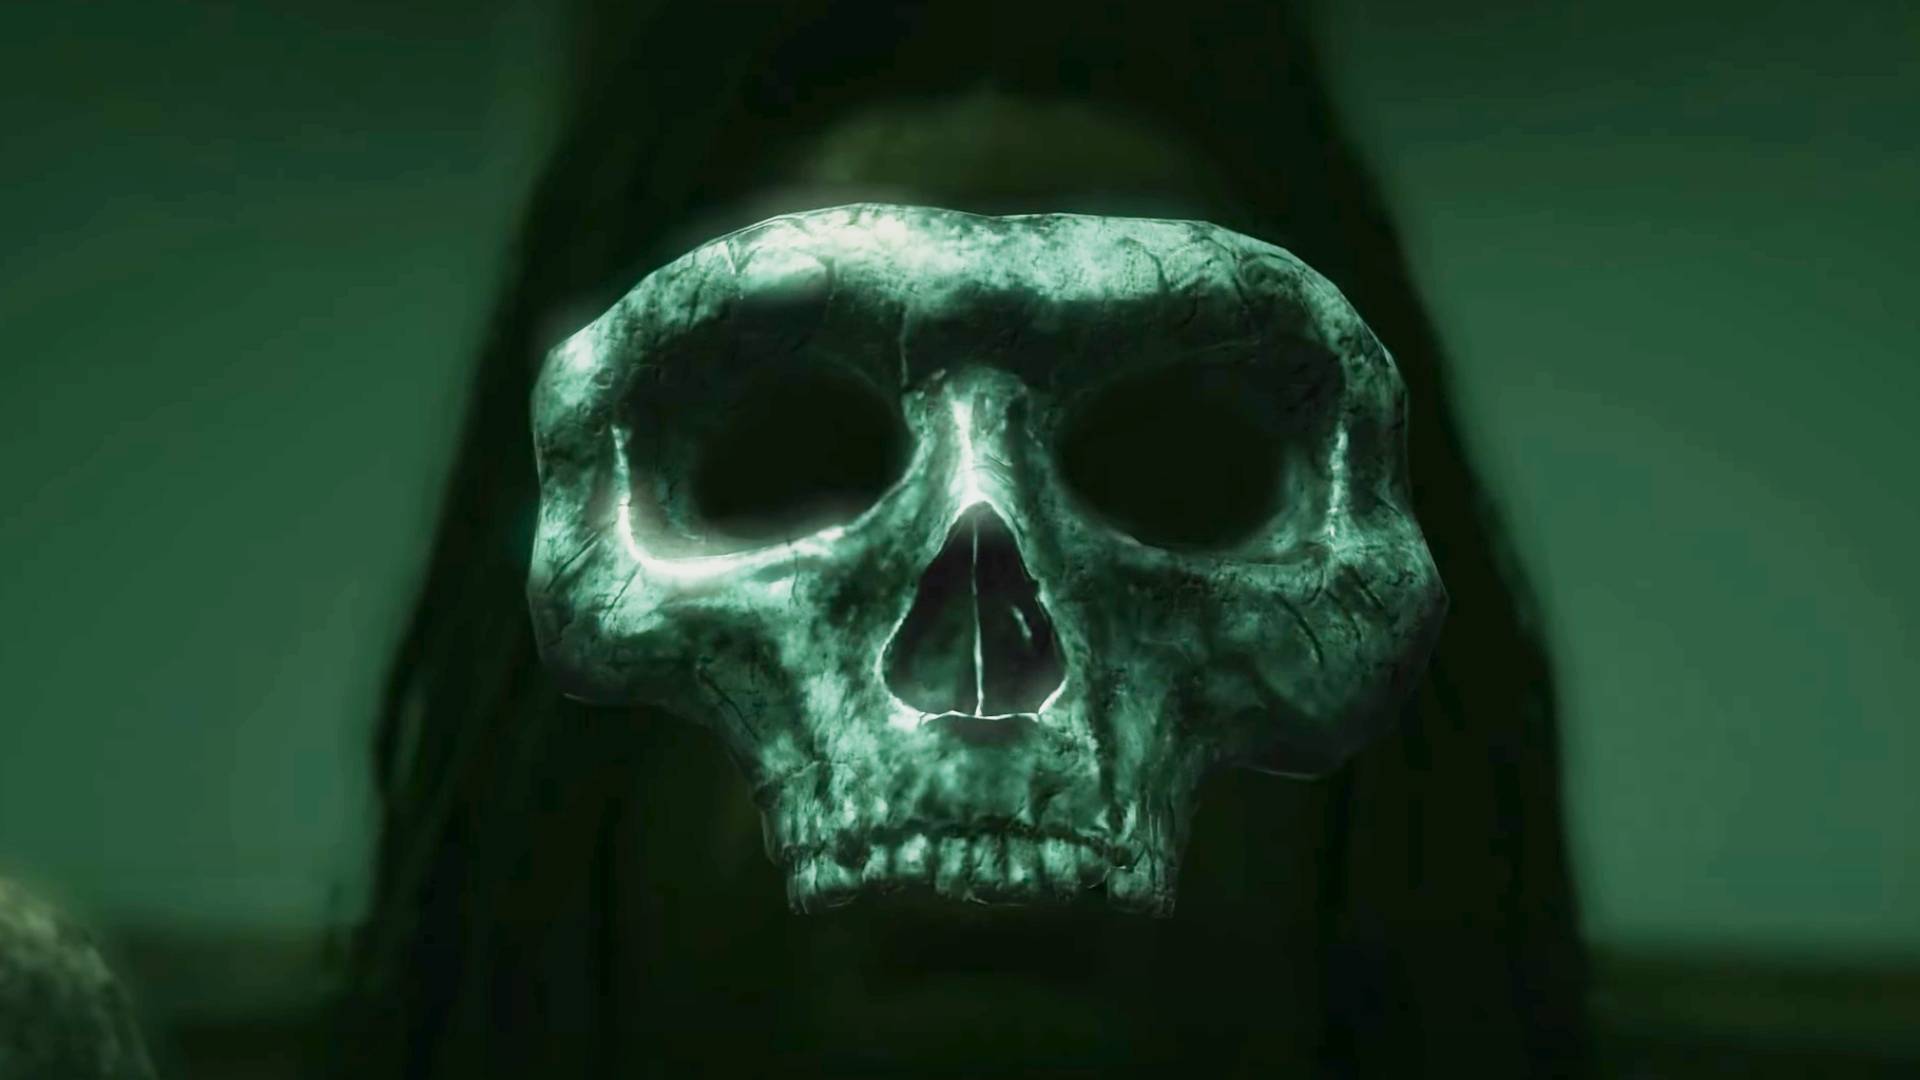 Skull and Bones' new beta event starts next week